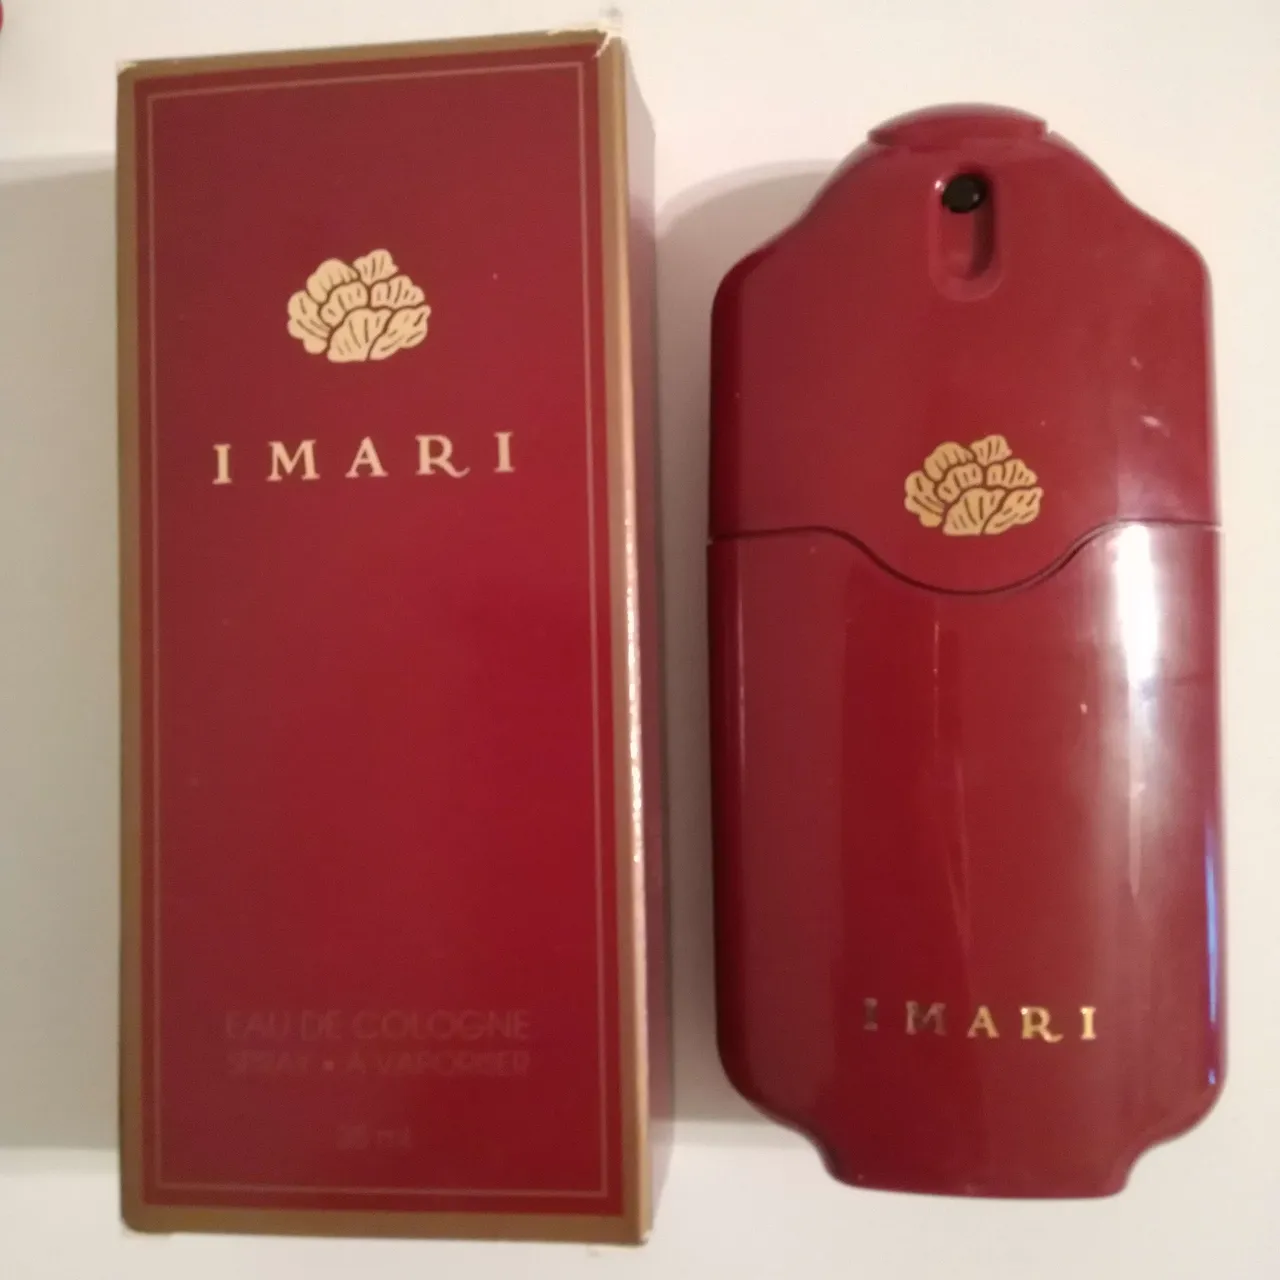 IMARI Perfume photo 1